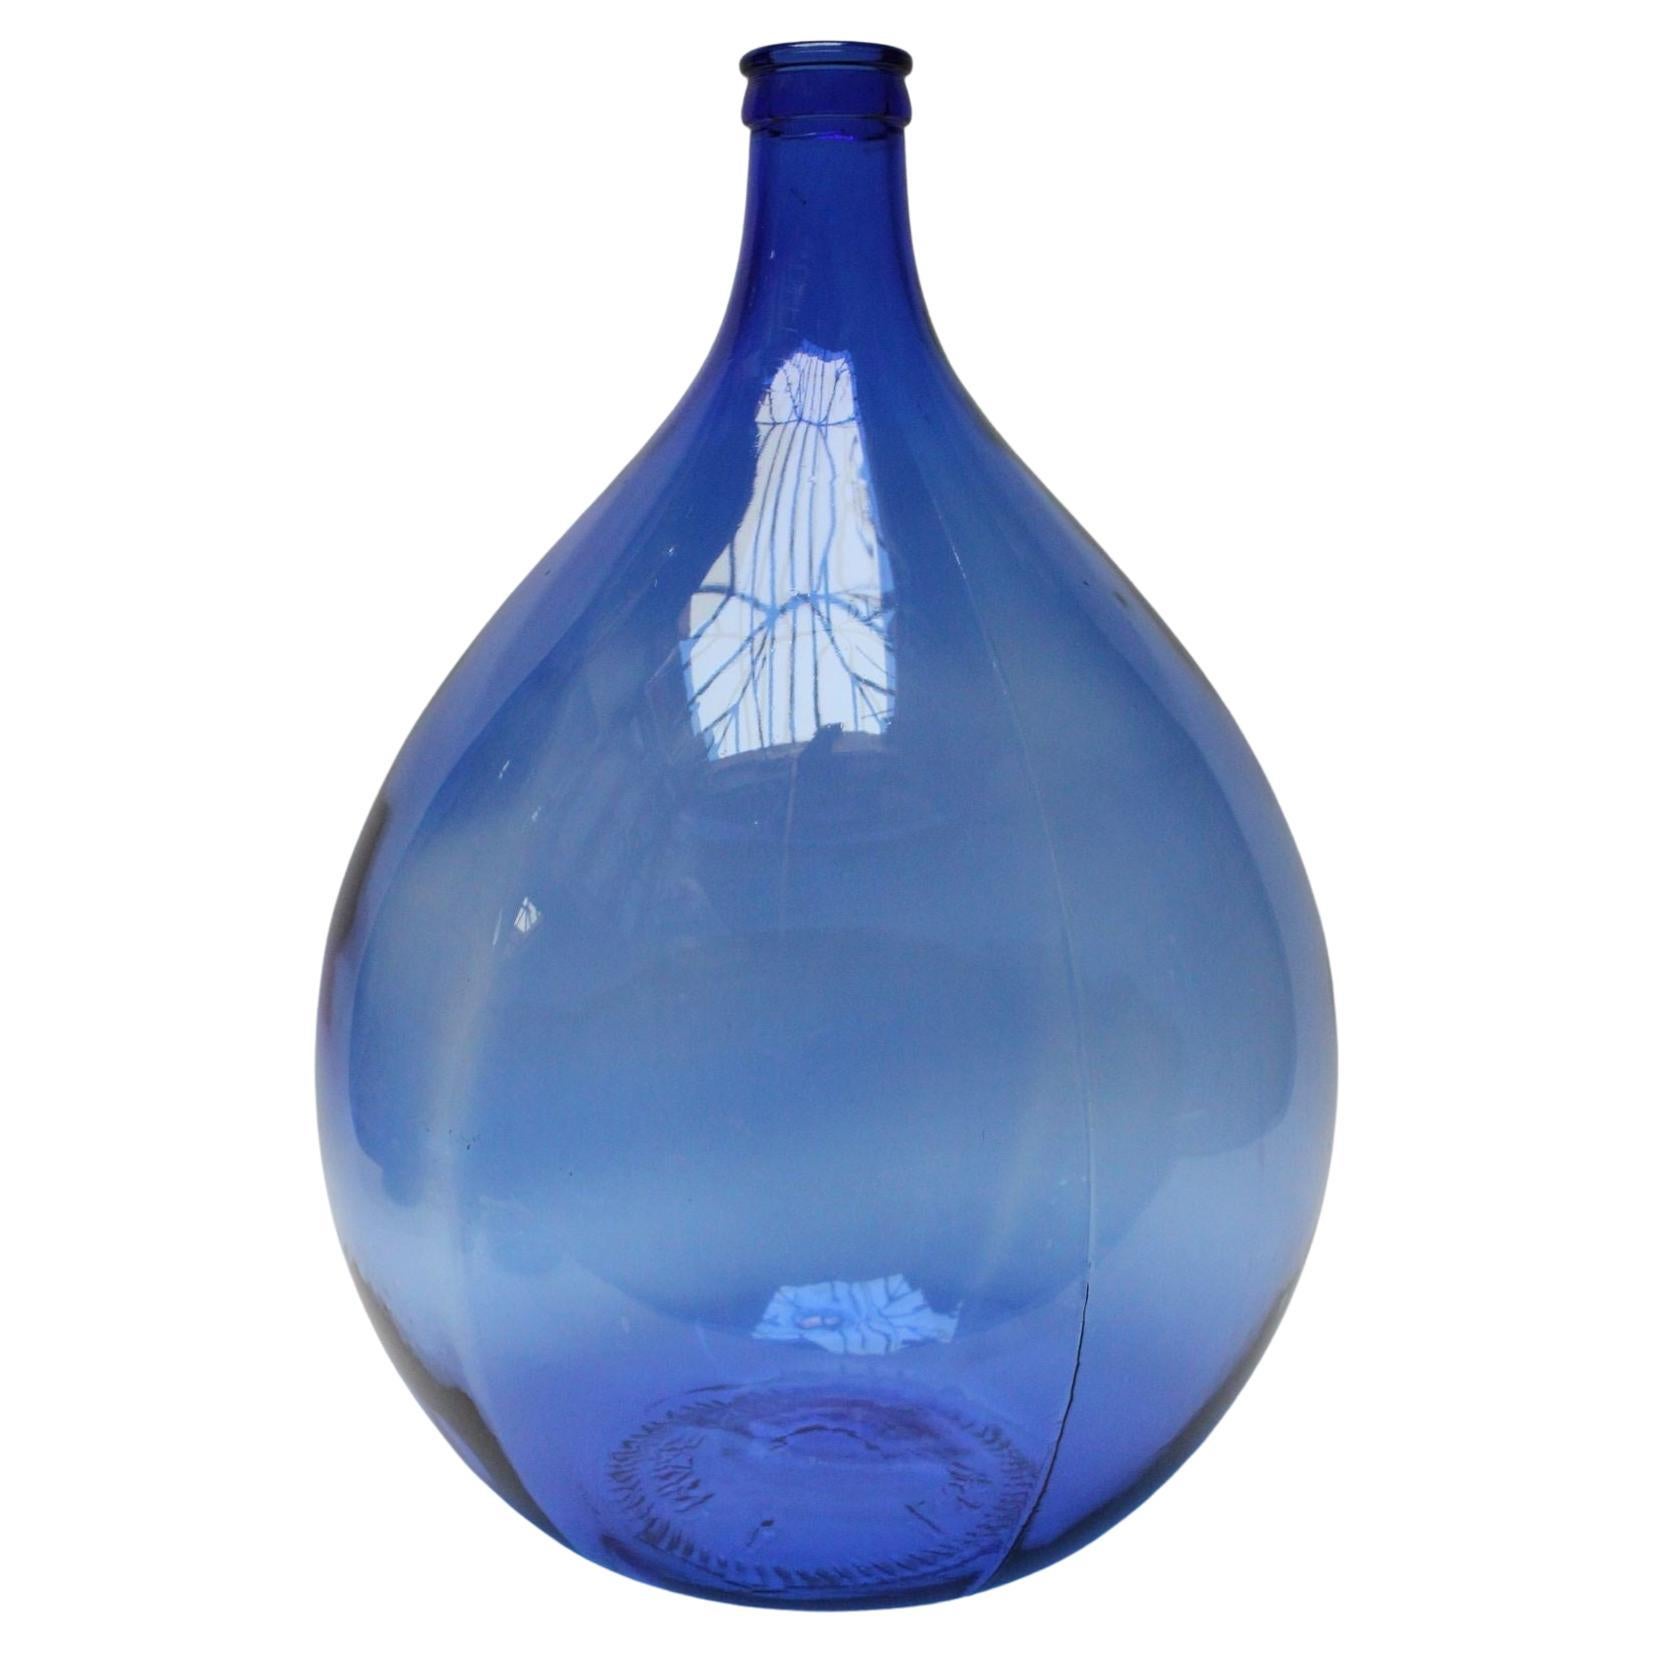 Vintage Italian Cobalt Blue Glass Demijohn / Carboy